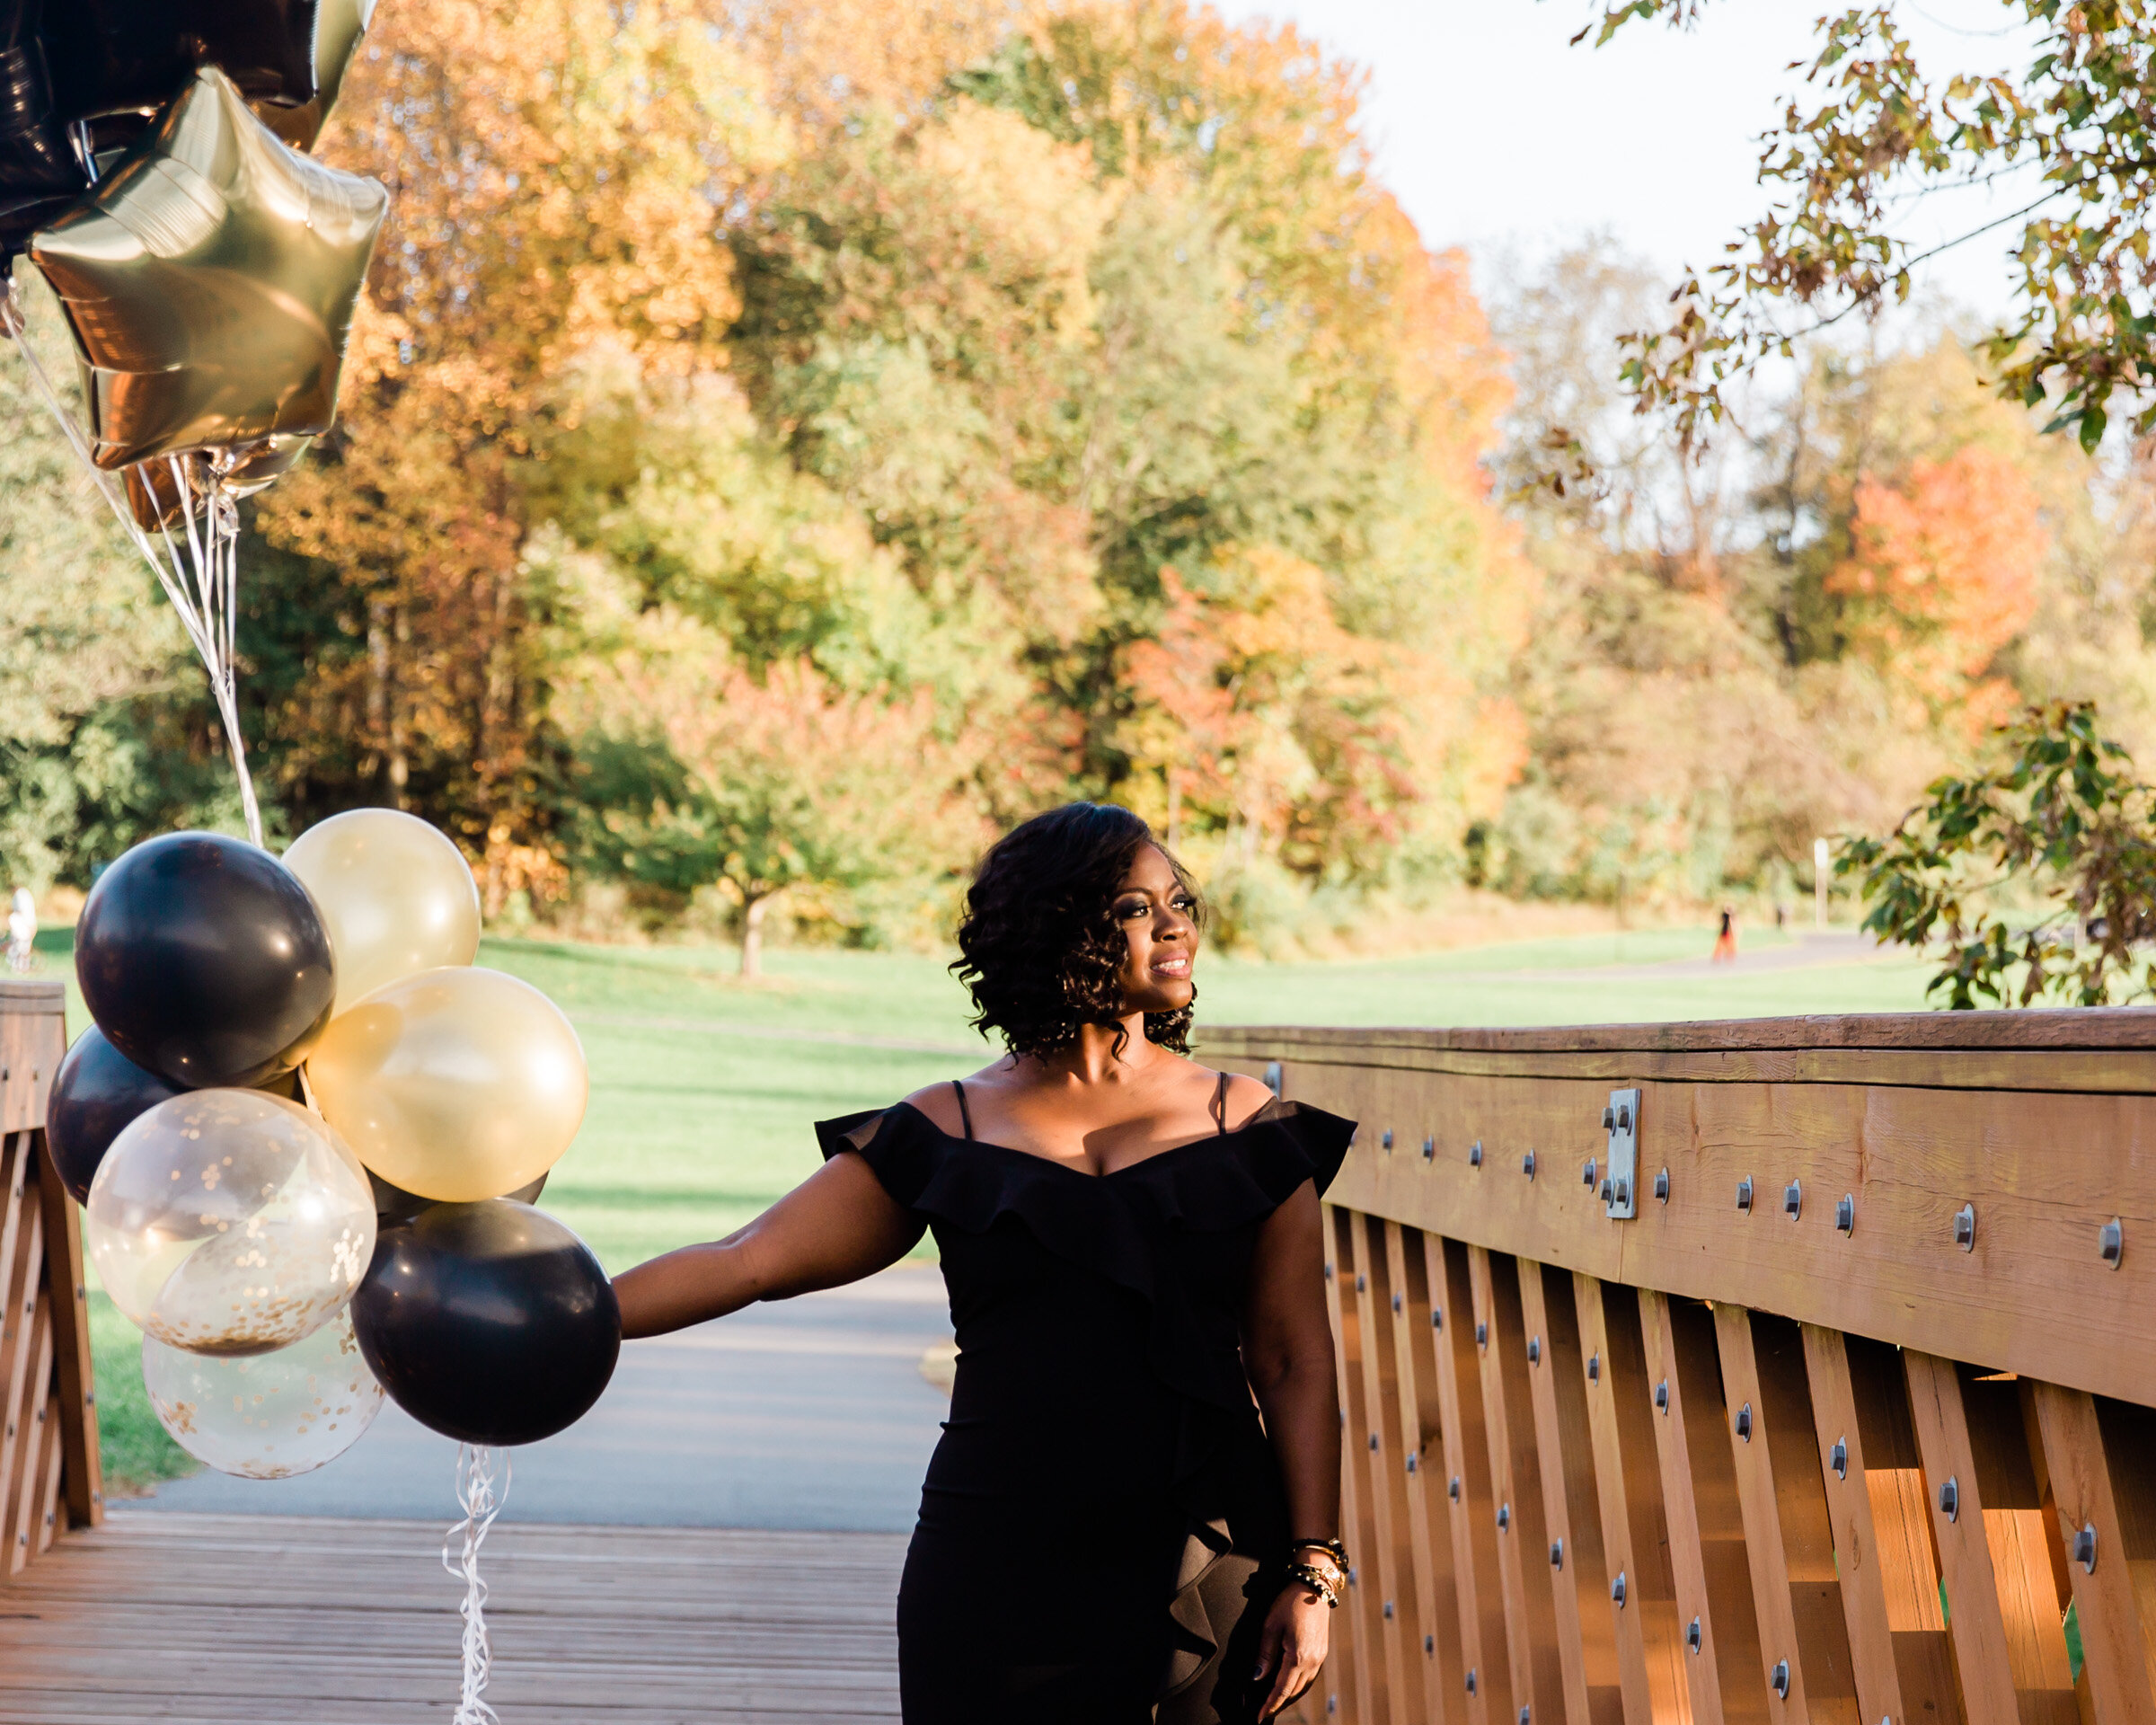 Black Female Portrait Photographer in Baltimore 40t Birthday Photoshoot by Megapixels Media Photography-16.jpg